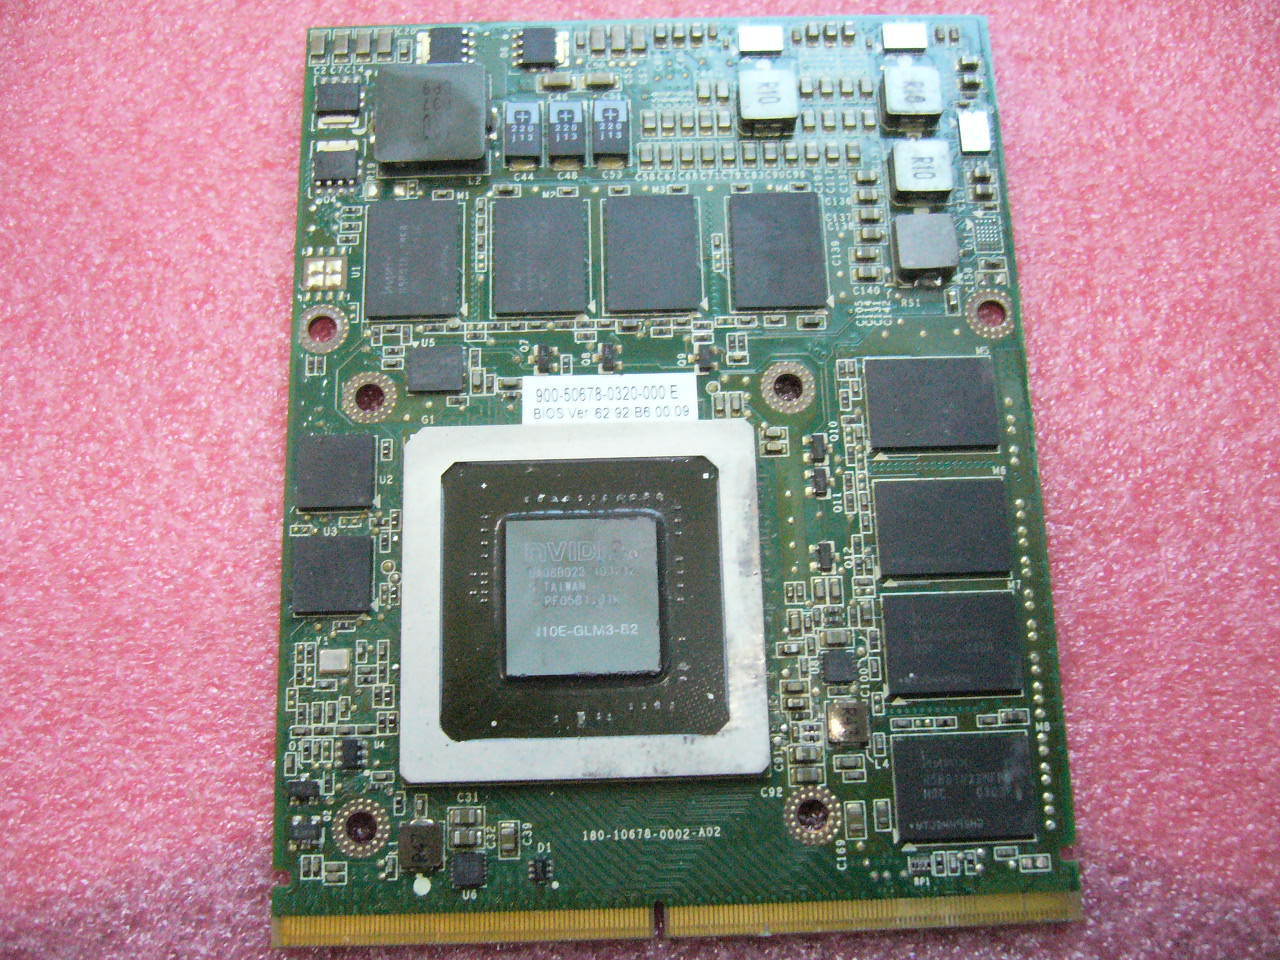 QTY 1x Nvidia Quadro FX3800M N10E-GLM3 1GB Mem MXM Video Card Sold For parts